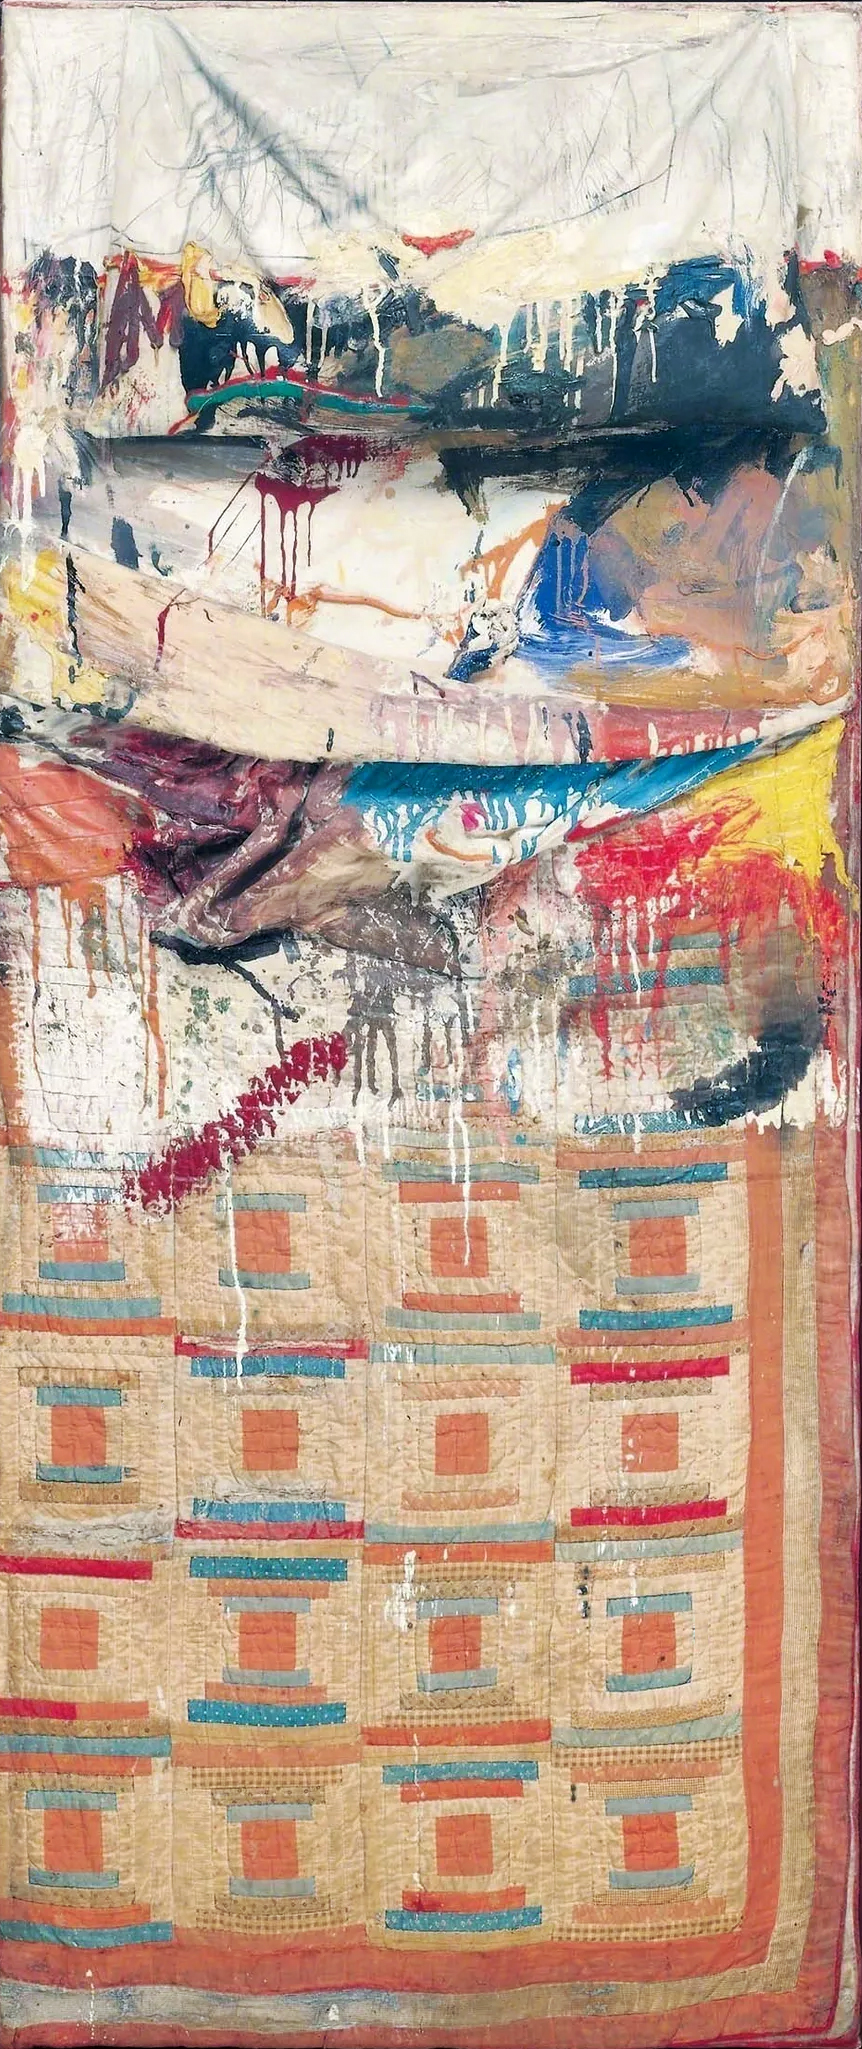 Robert Raushenberg, Bed, 1955